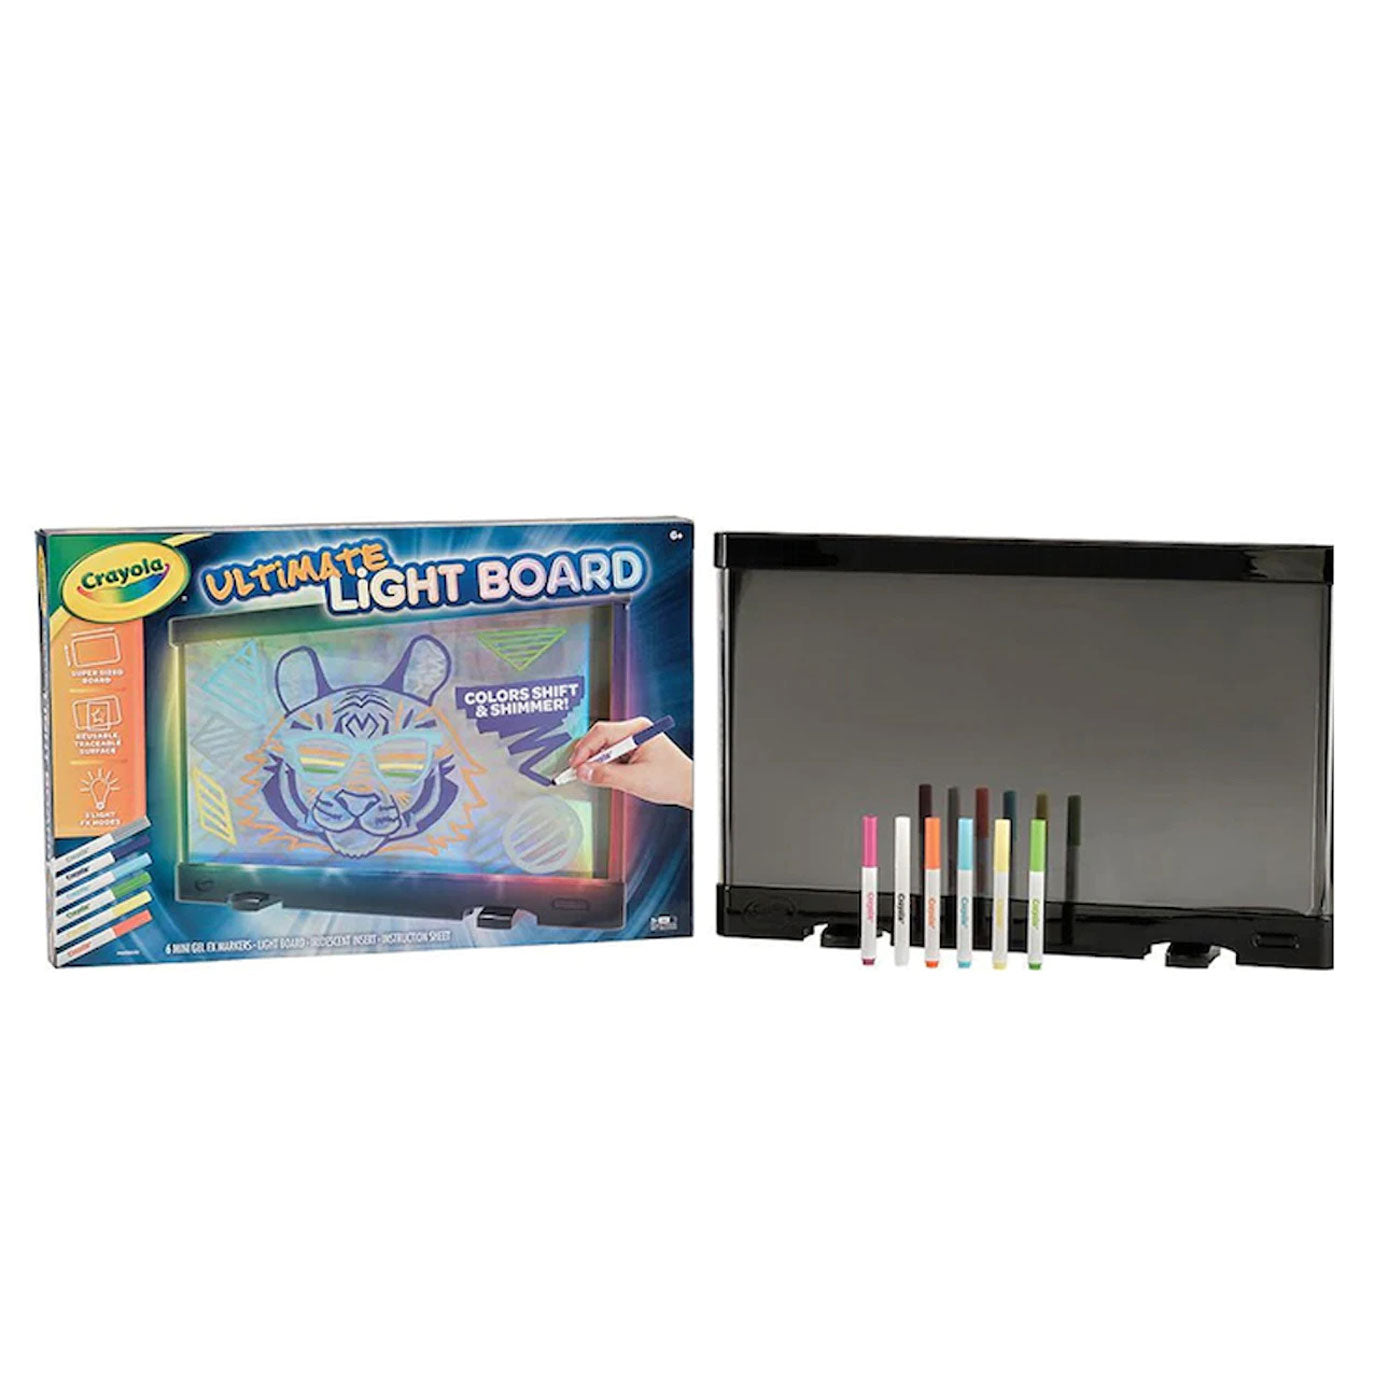 Crayola Ultimate Light Board Tablet Black